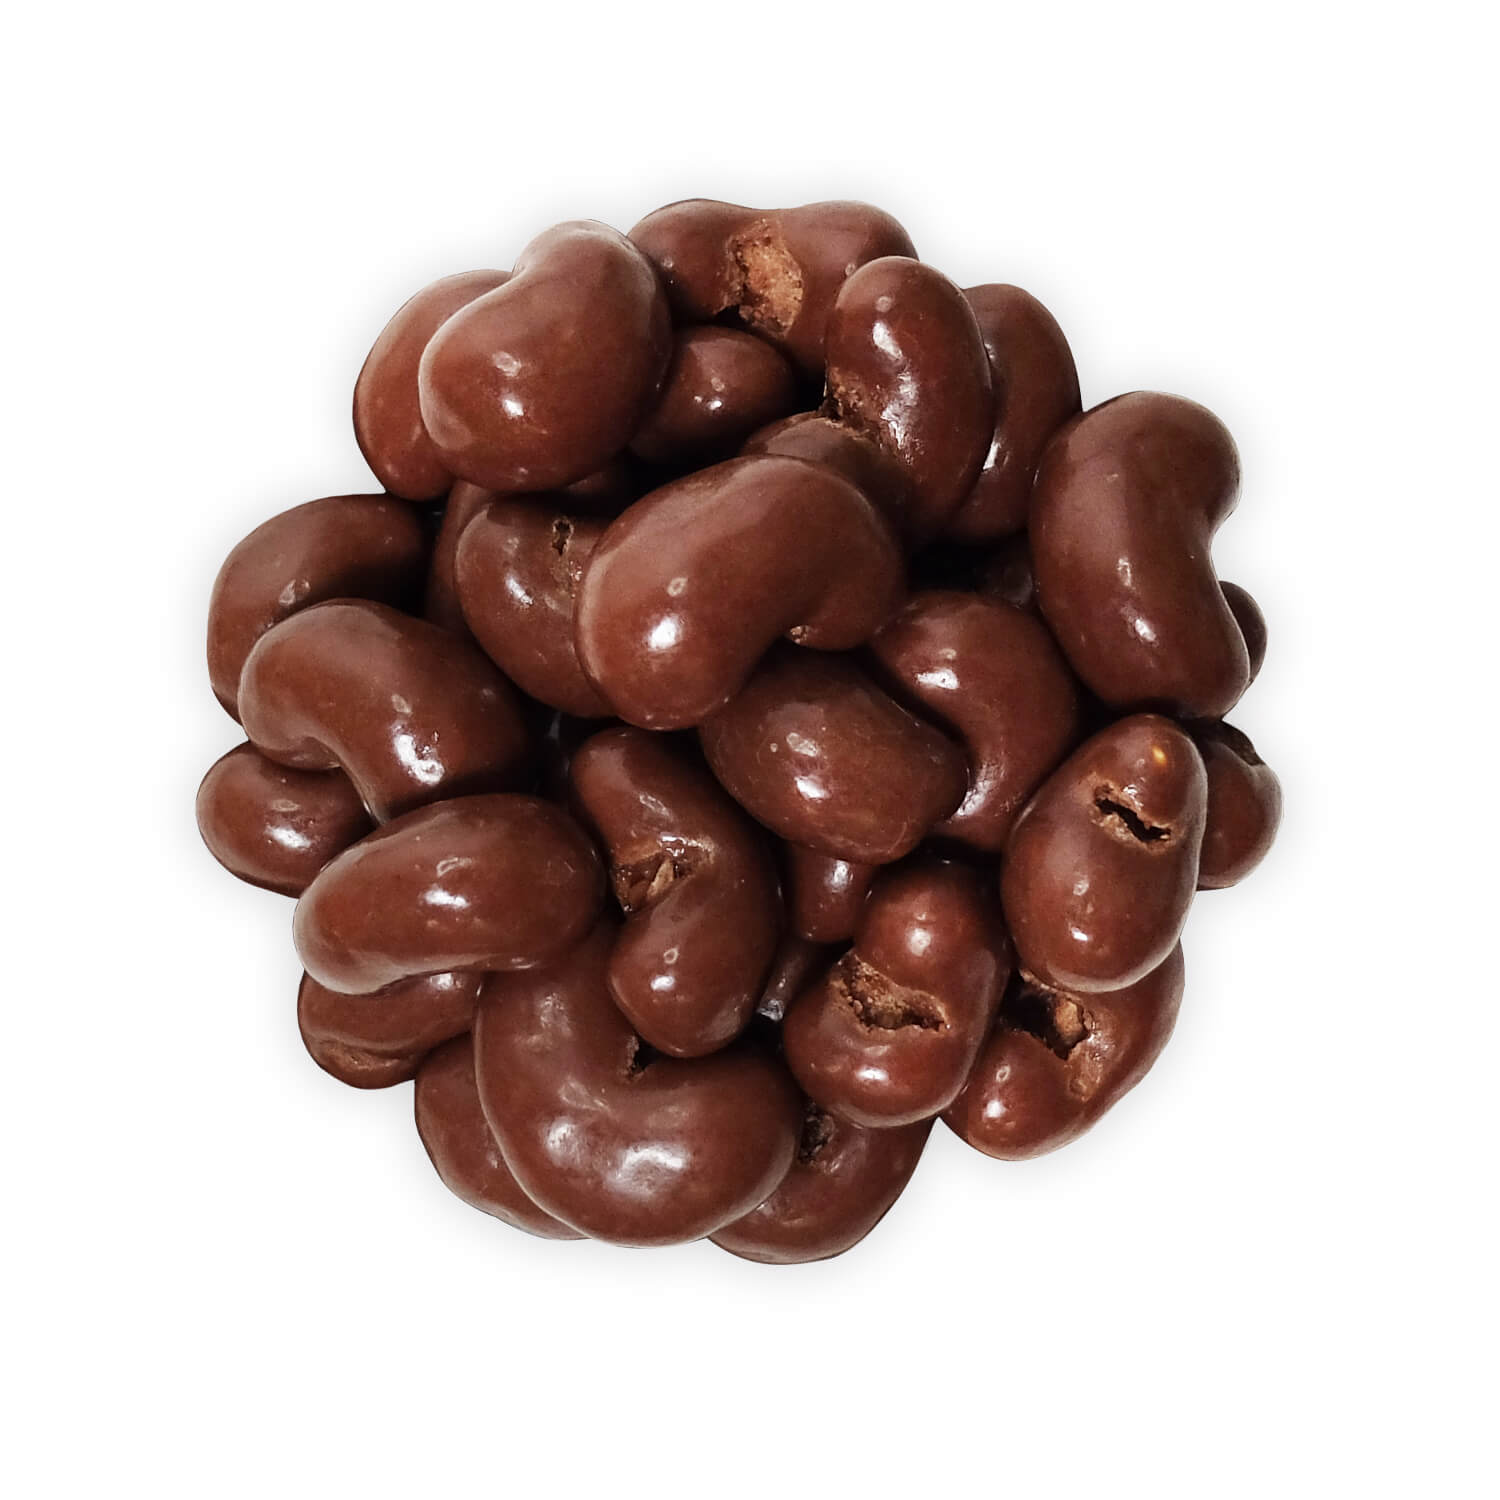 Milk chocolate cashews